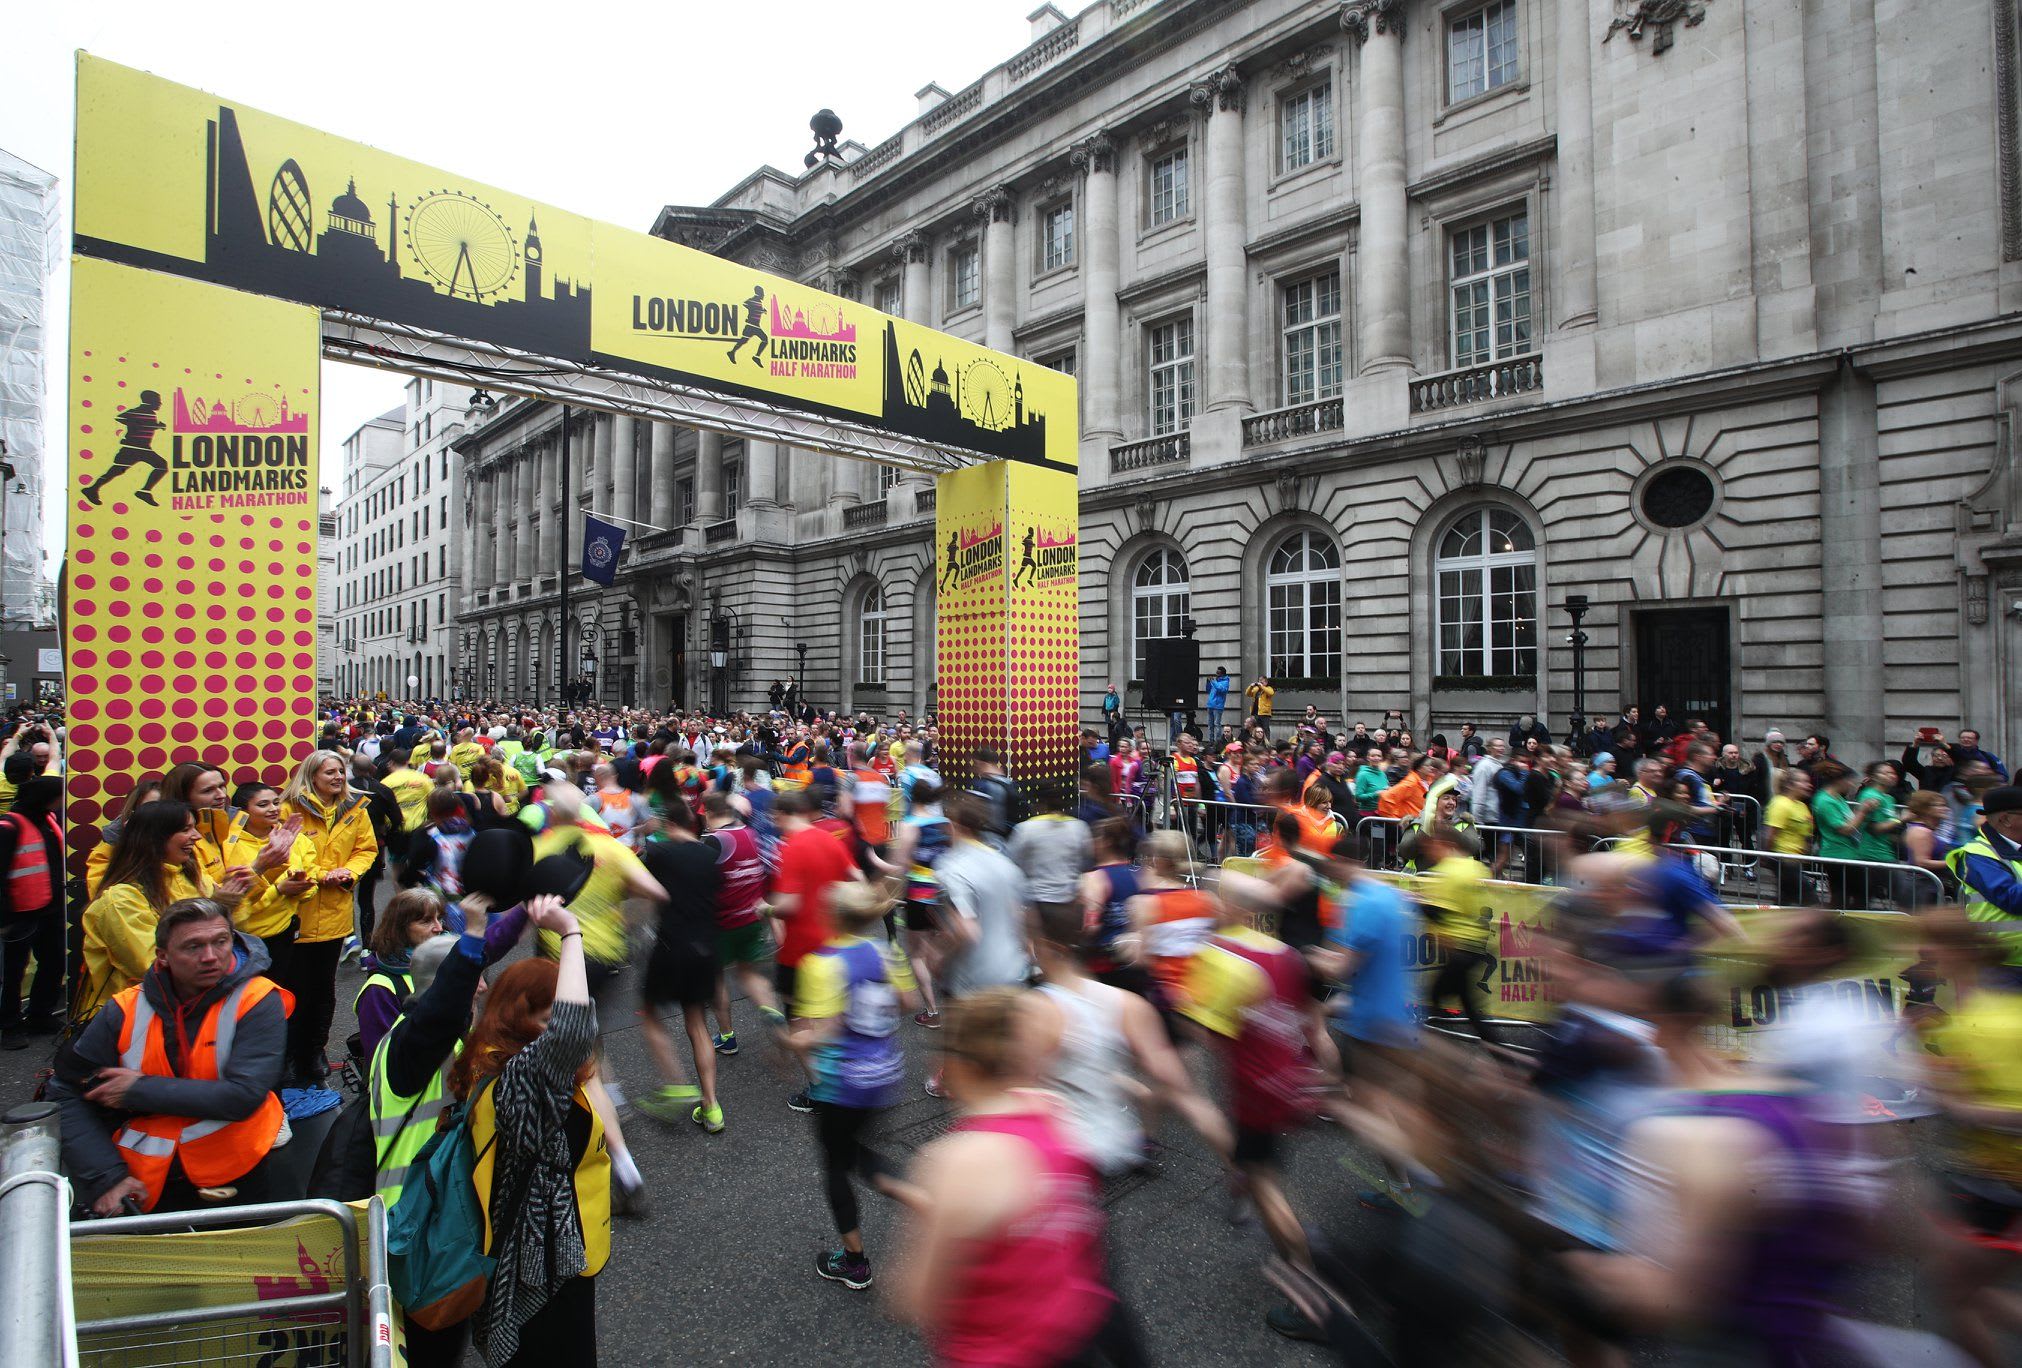 London Landmarks Half Marathon Running in London